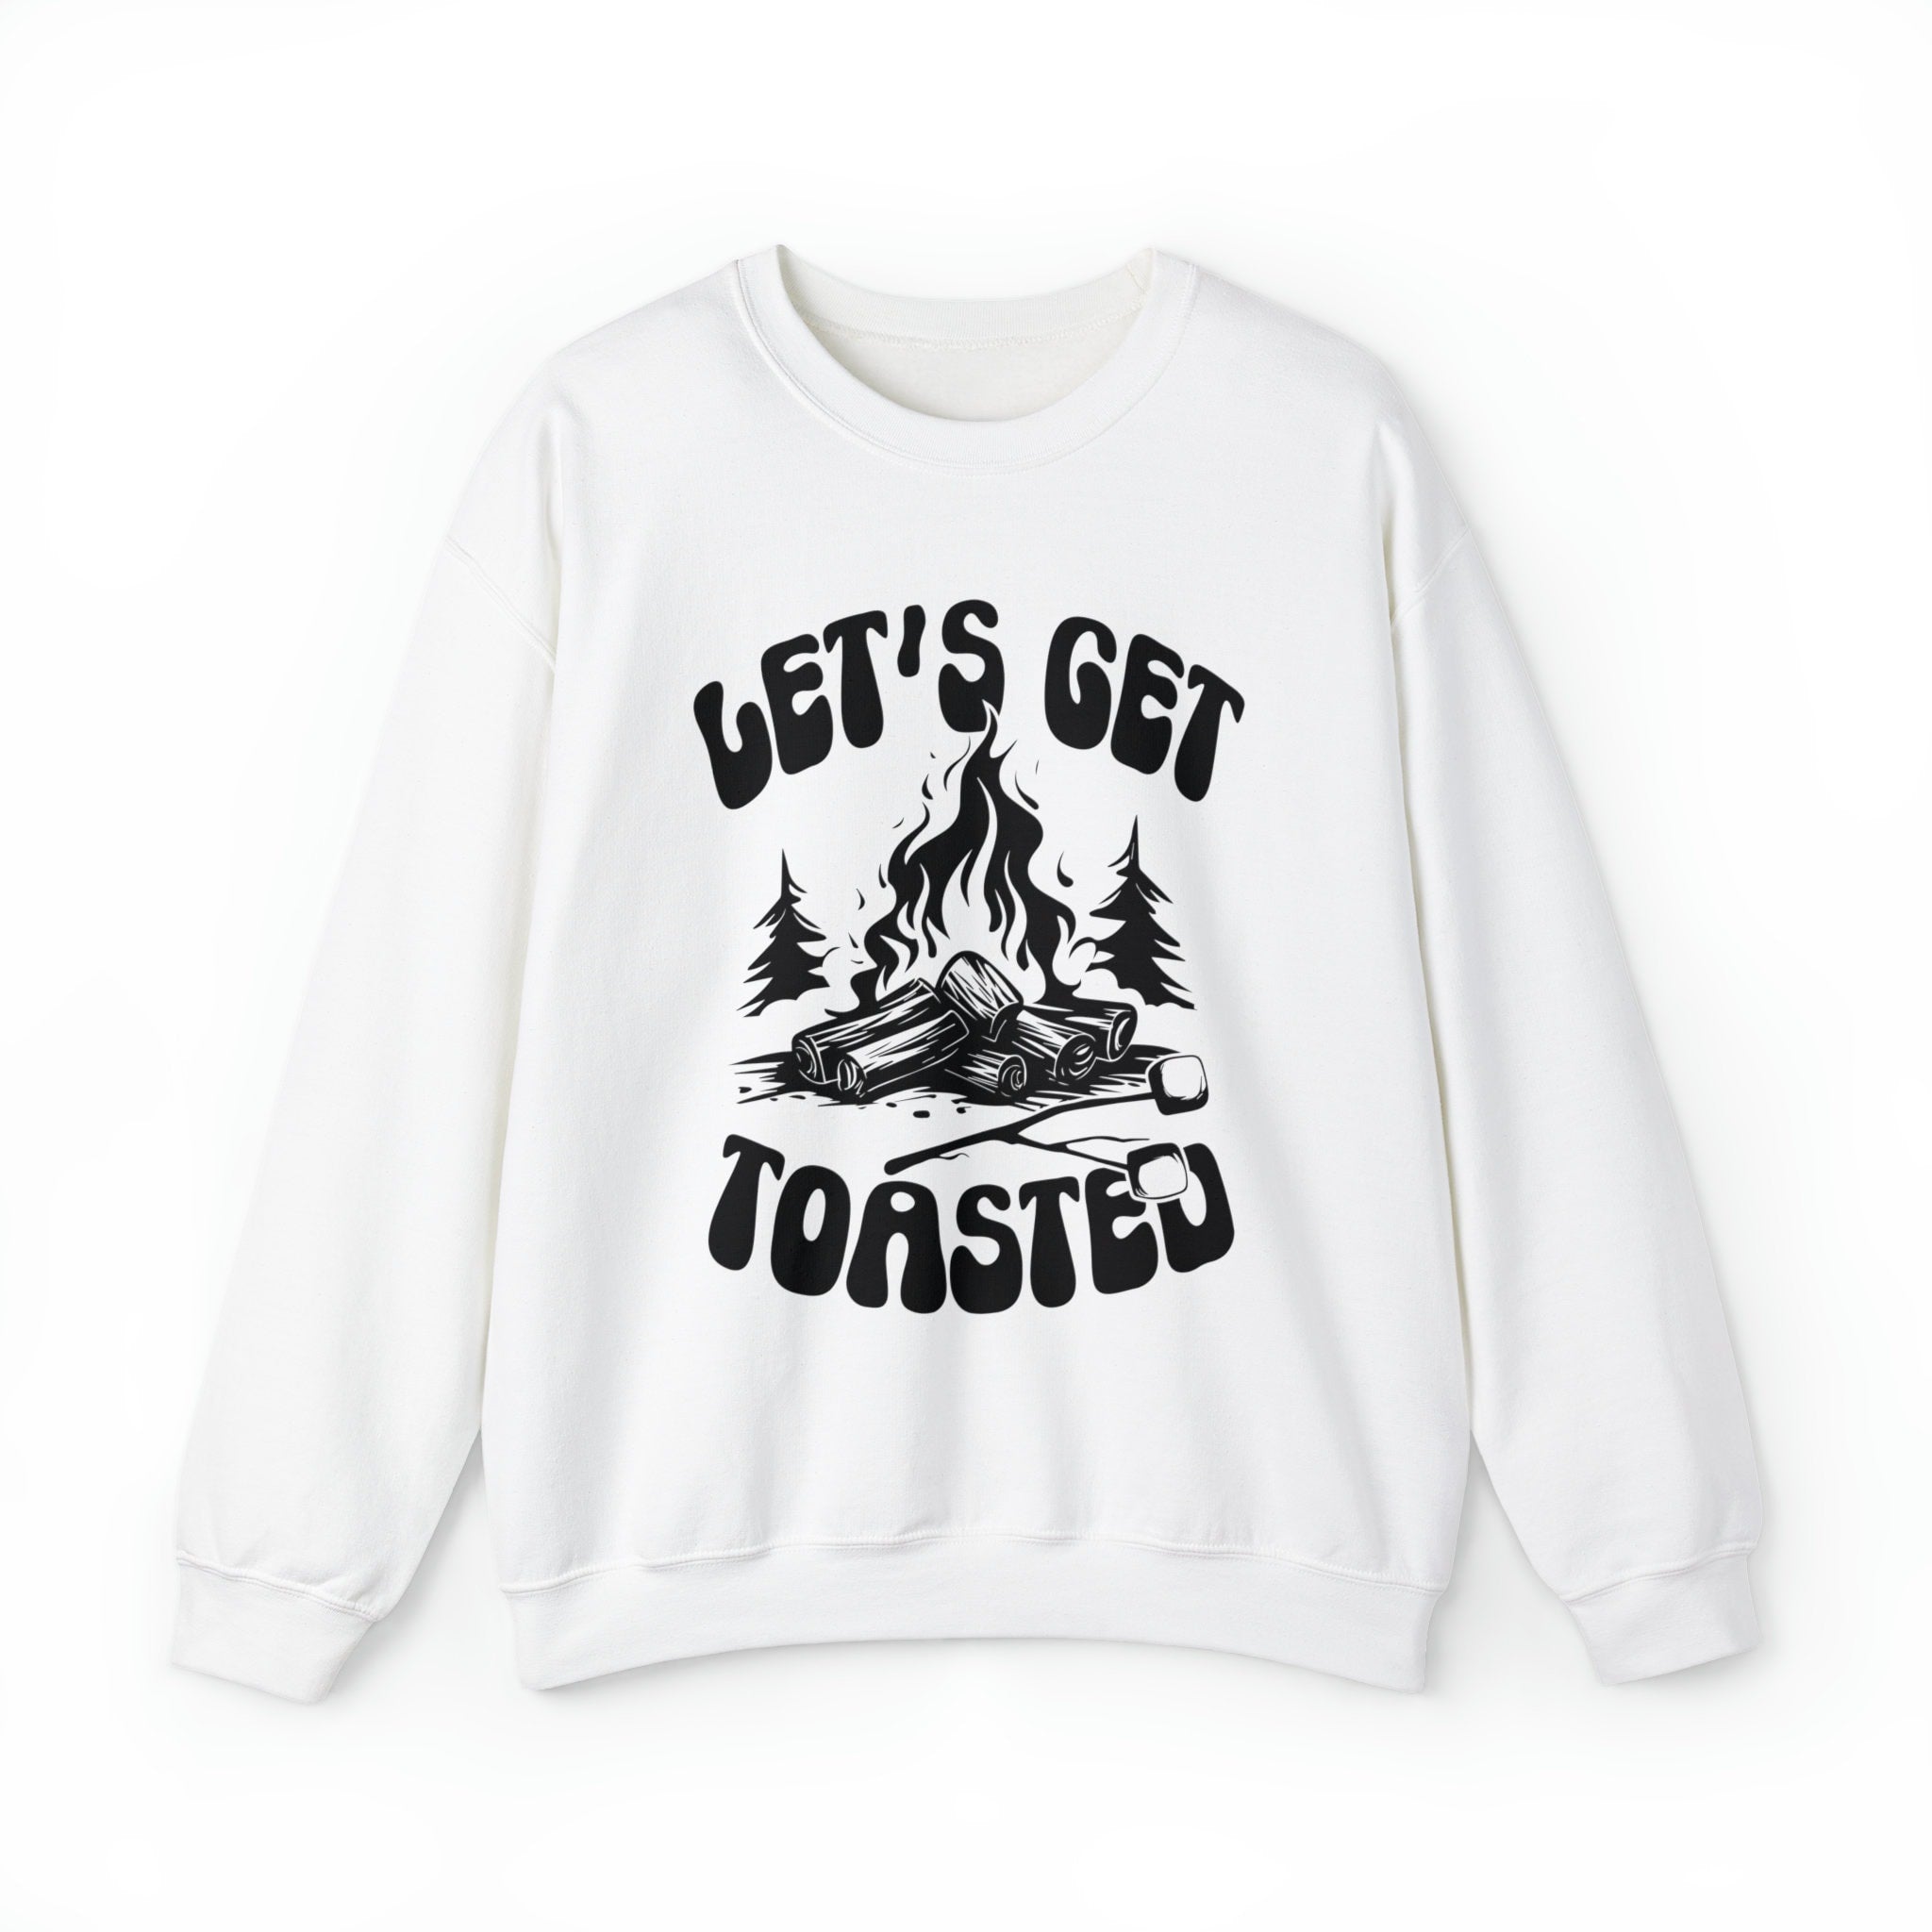 Camp bachelorette gift sweatshirt, lets get toasted, camping bachelorette, camp bachelorette, forest themed bachelorette sweatshirt